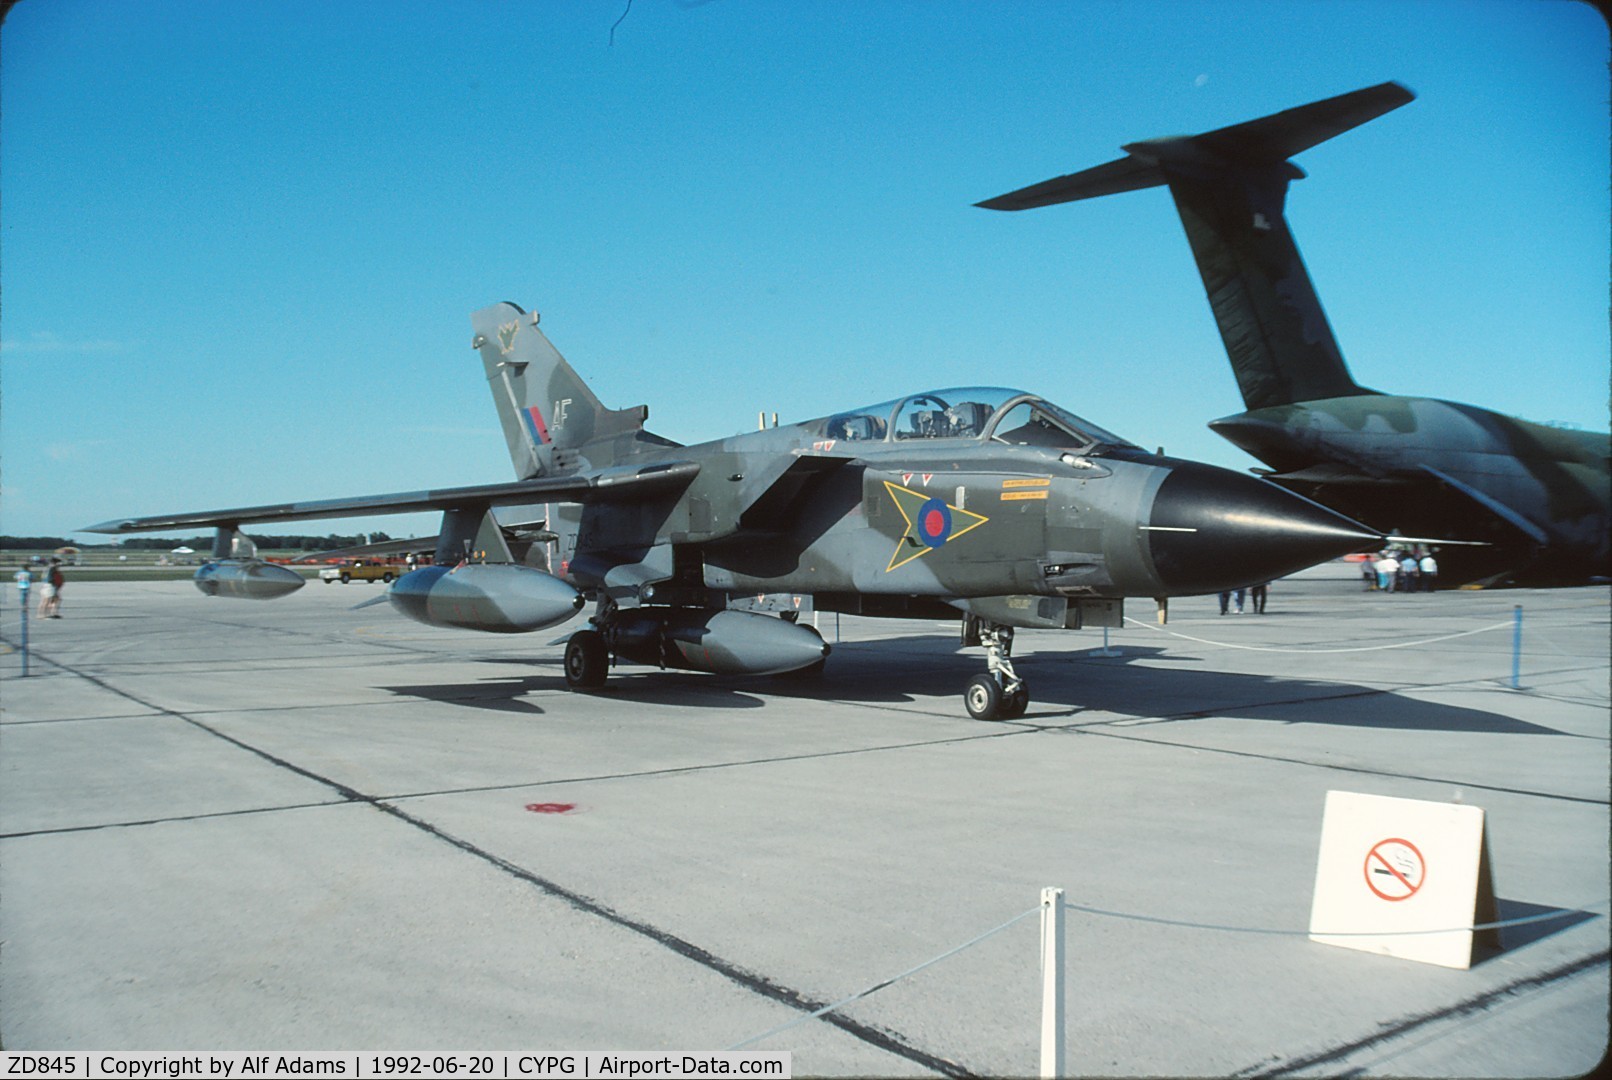 ZD845, 1985 Panavia Tornado GR.1 C/N 432/BS143/3197, Displayed at the airshow at Canadian Forces Base Portage la Prairie, Manitoba, Canada in 1992.